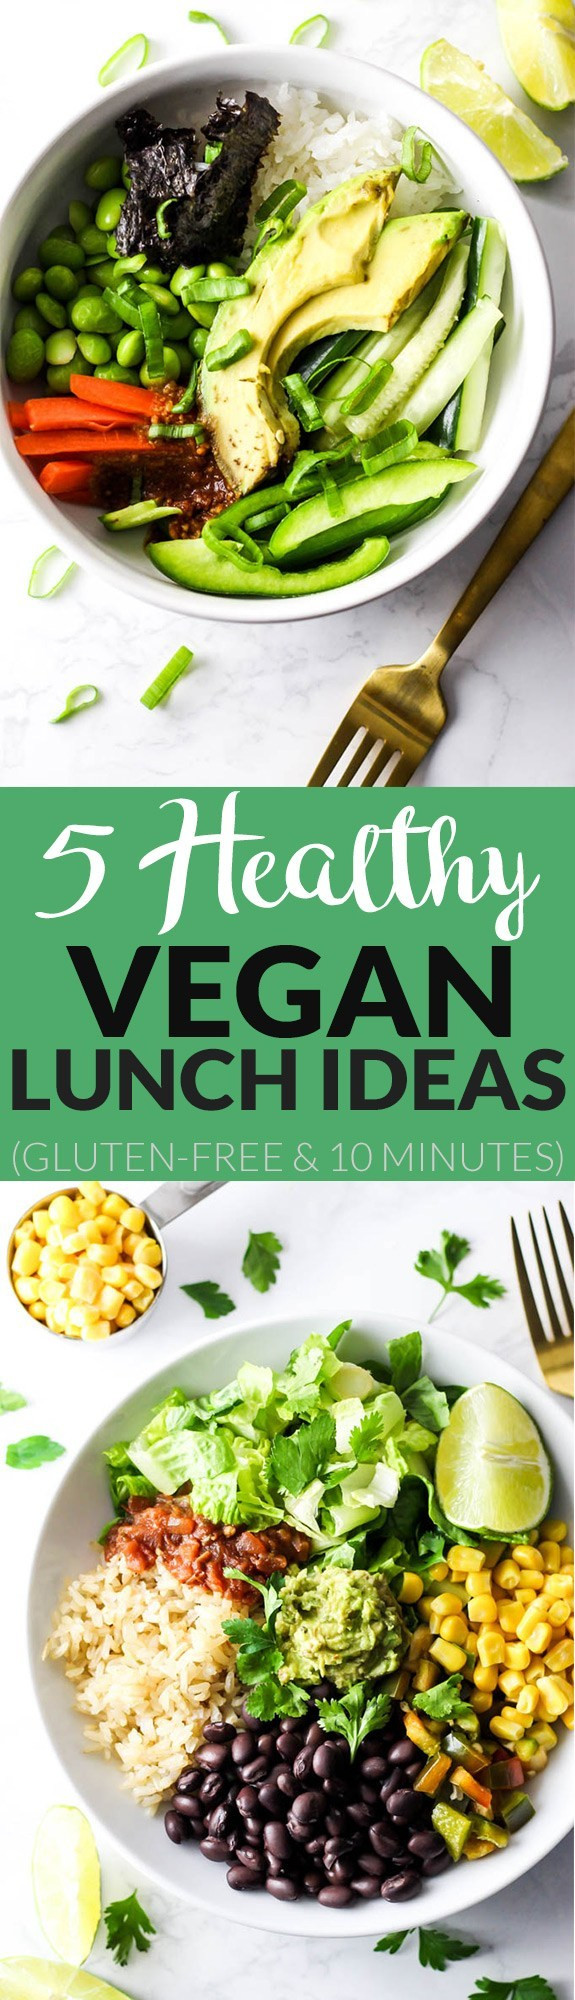 Easy Vegetarian Lunch Recipes
 5 Healthy Vegan Lunch Ideas